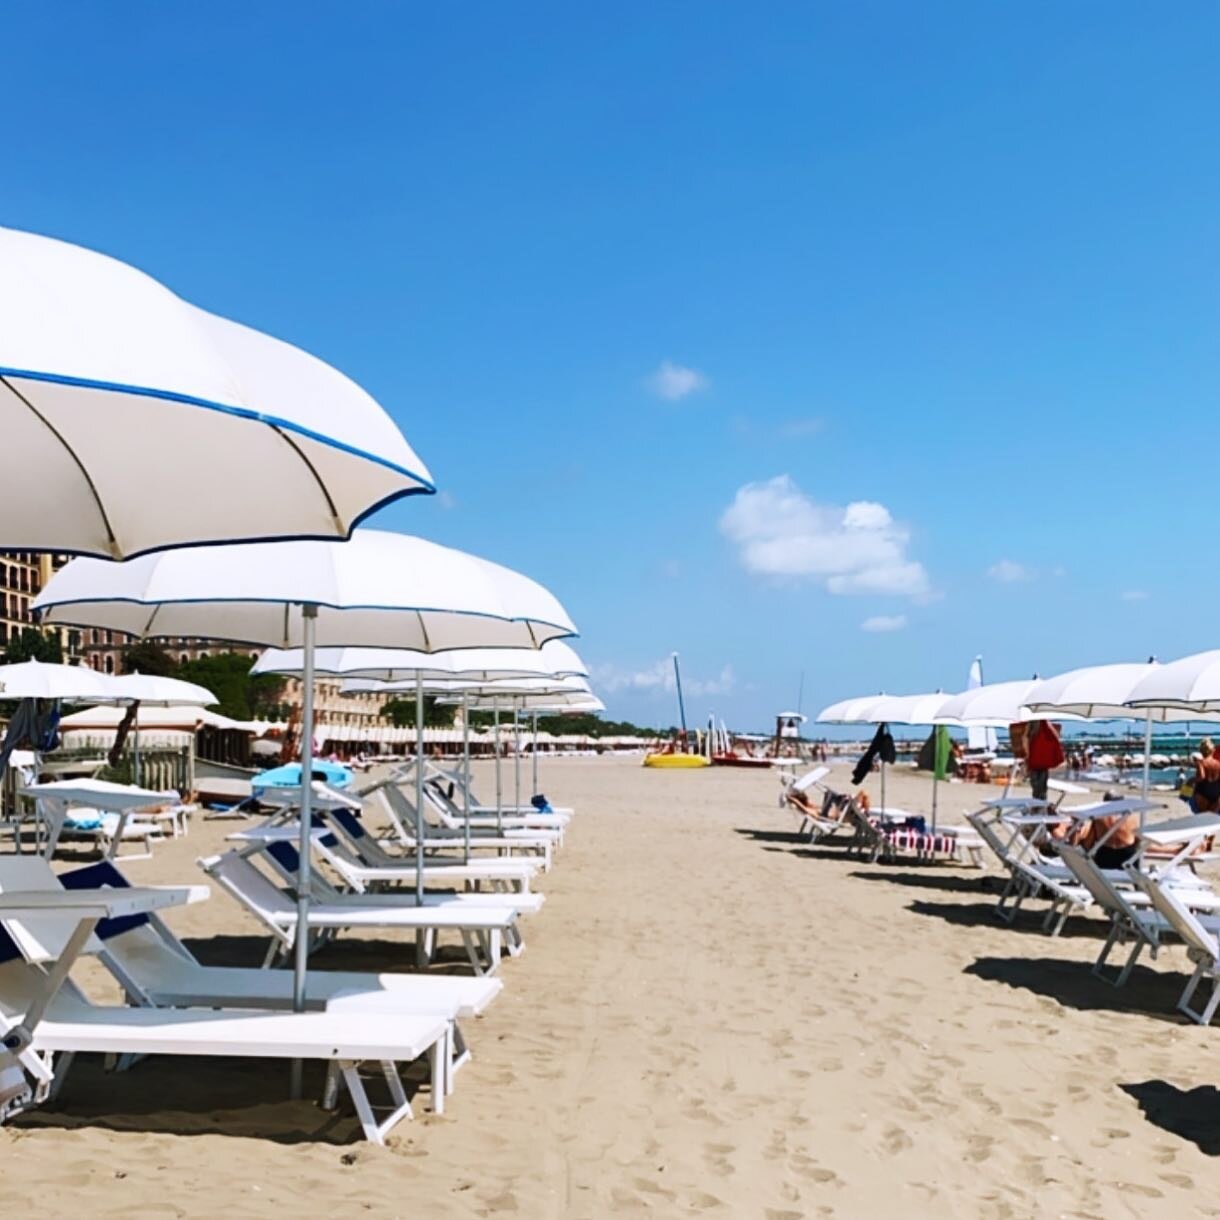 𝙽𝙴𝚆 𝙳𝙰𝚈 🌴🌊☀️ 
#beach 𝗕𝗔𝗚𝗡𝗢 𝗠𝗔𝗥𝗖𝗢𝗡𝗜 
#summervibes #beachlife #summer2021 #lidodivenezia